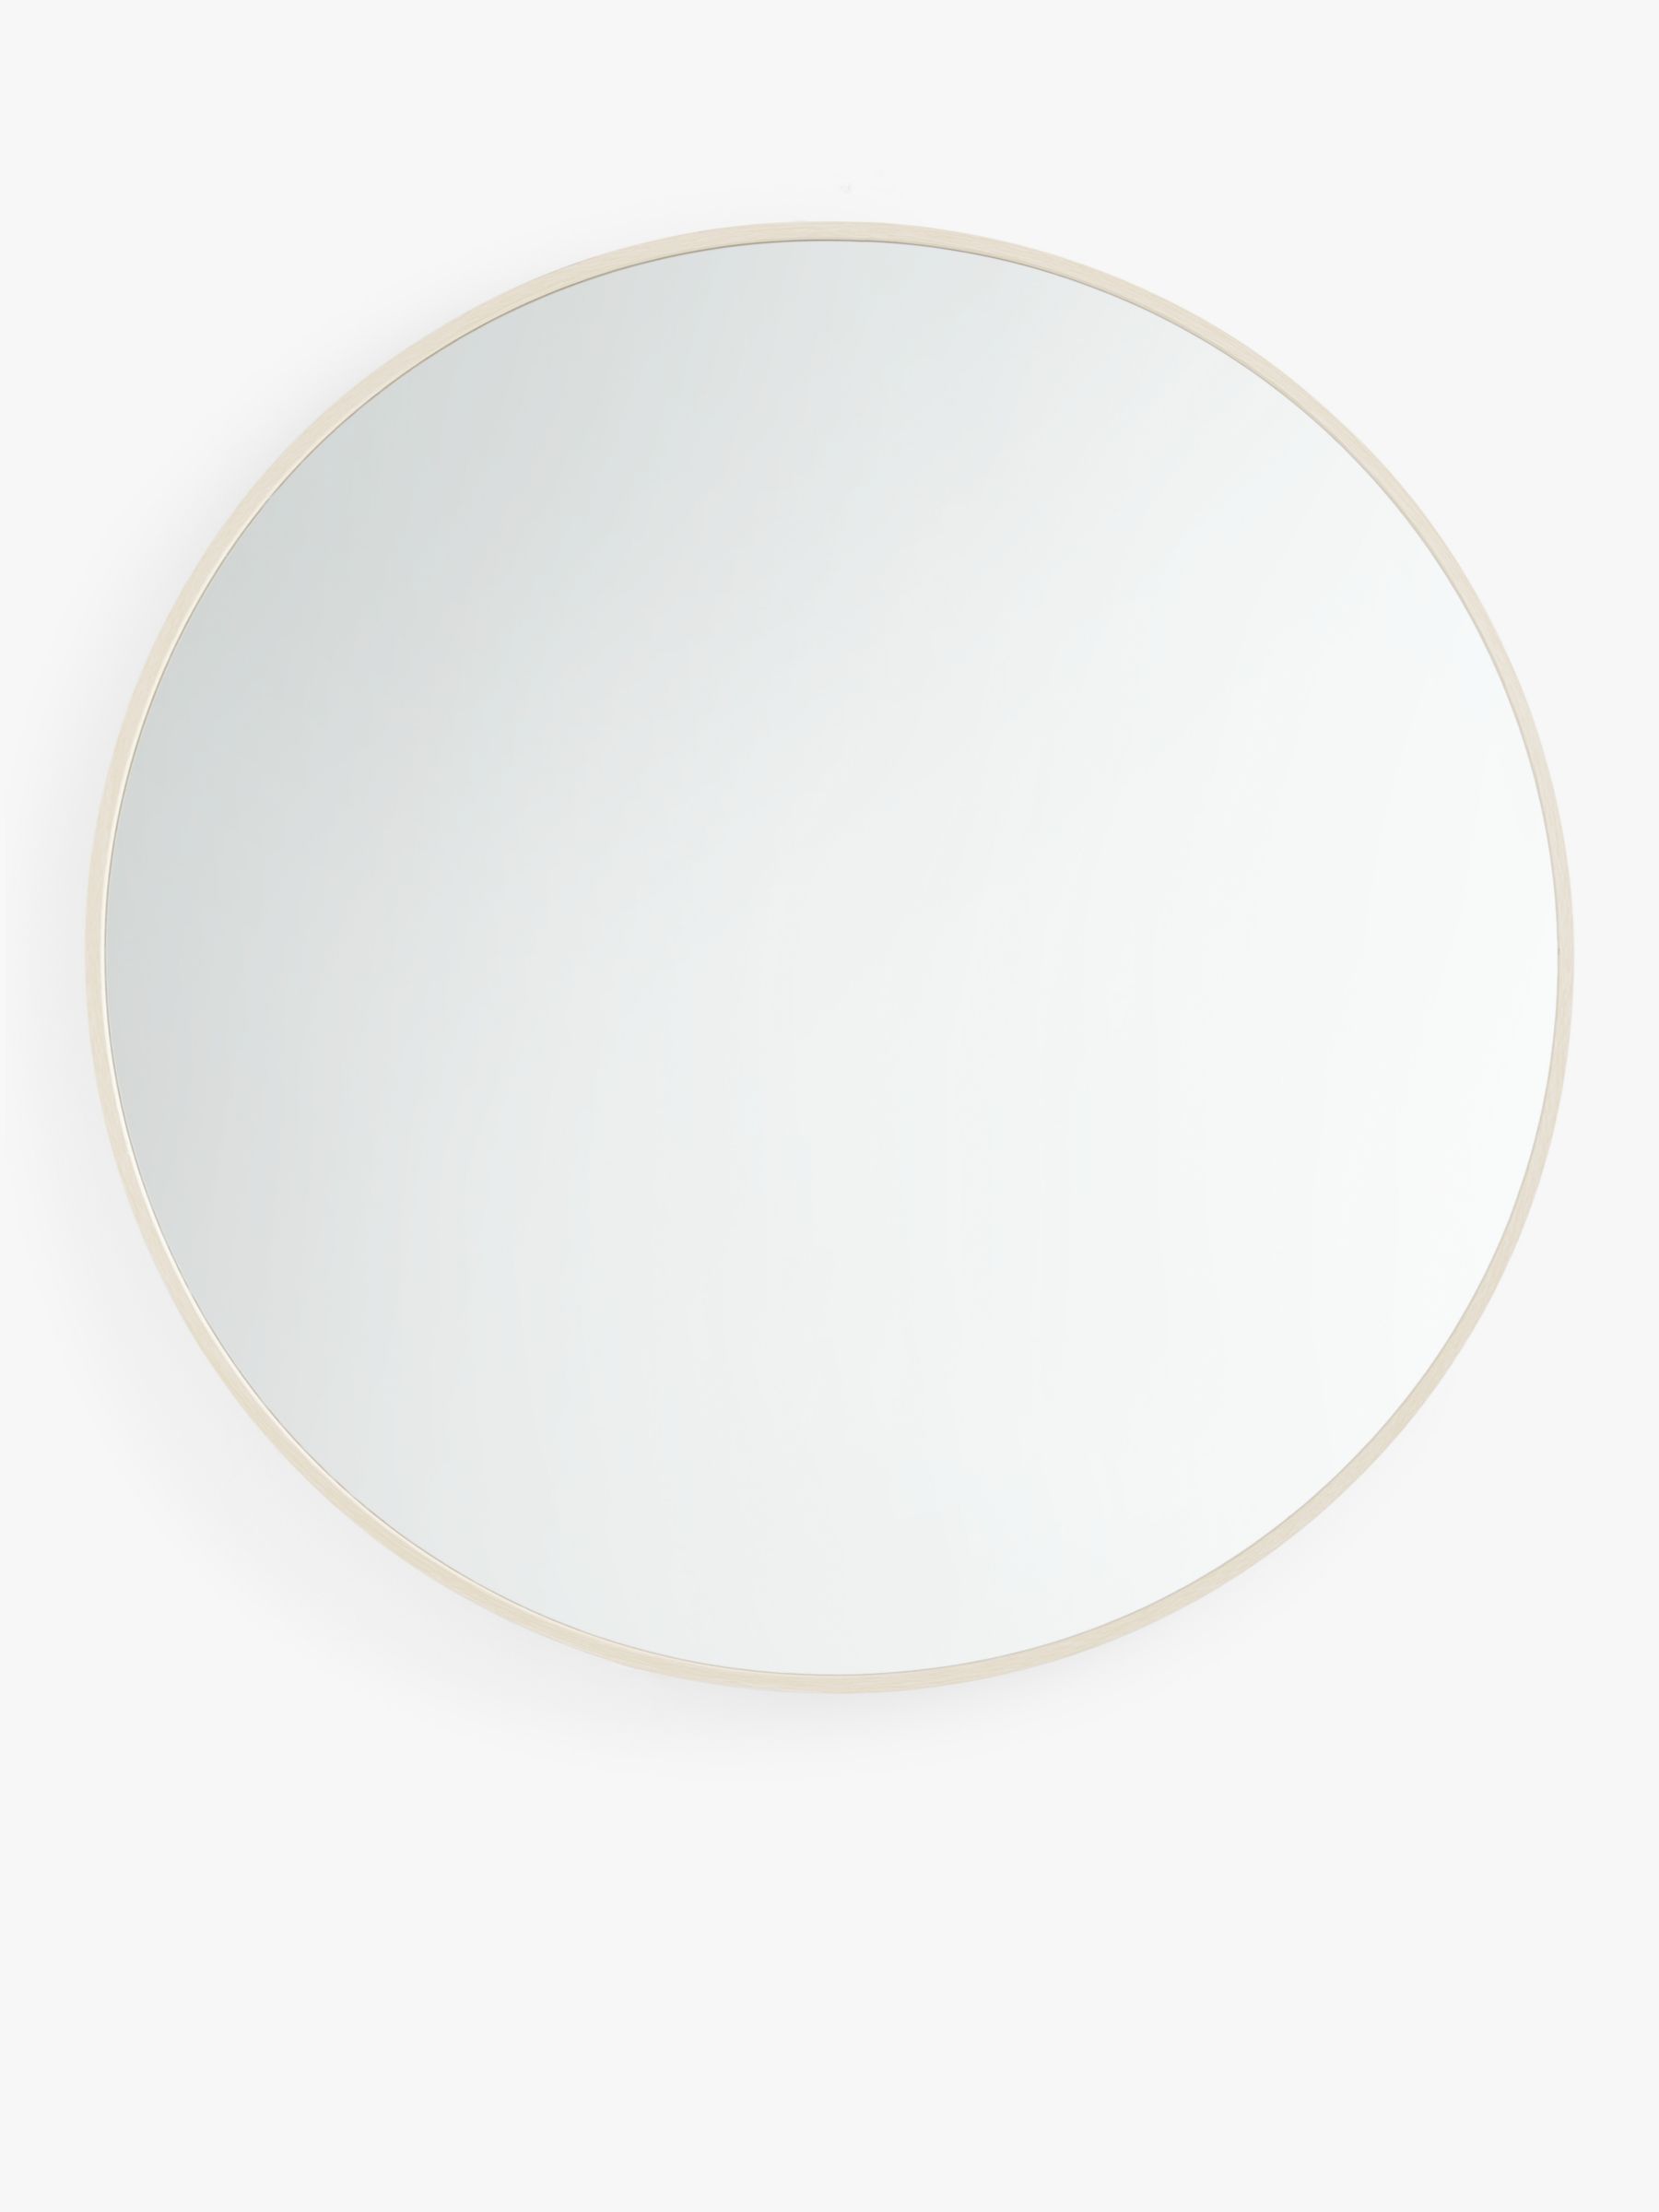 John Lewis ANYDAY Thin Metal Frame Round Wall Mirror, 65cm, Natural